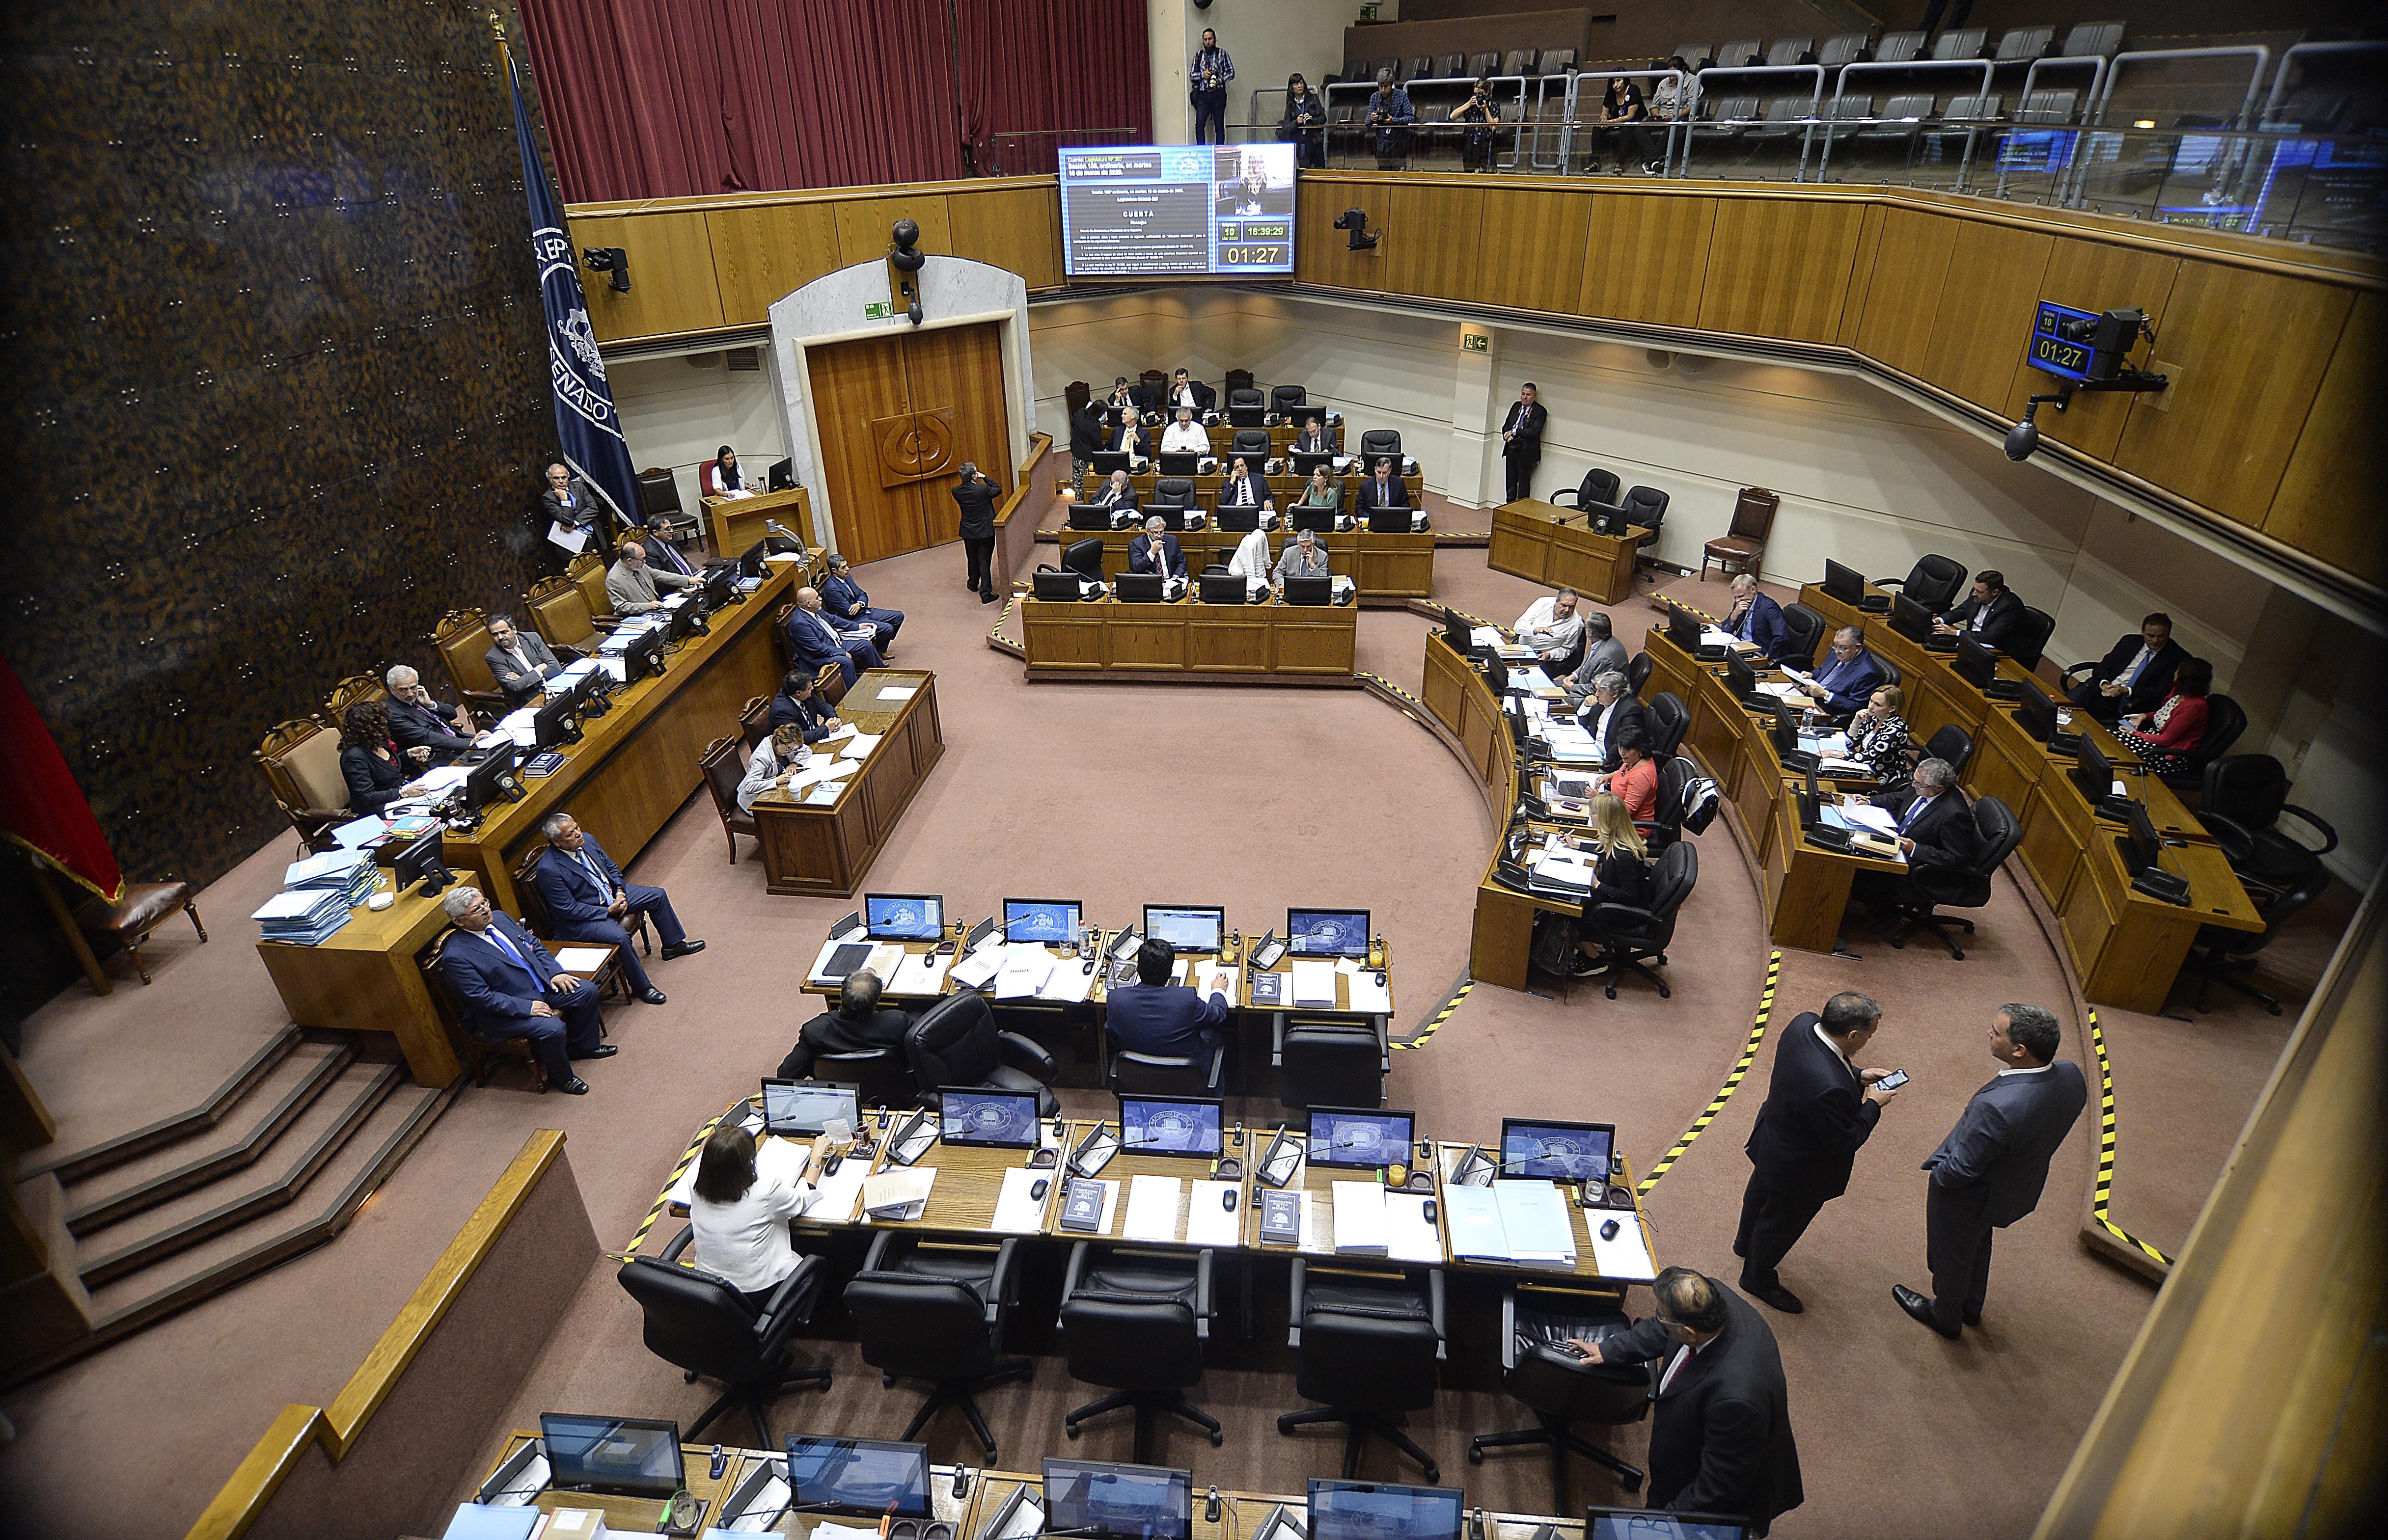 10/03/2020 Senado de Chile
POLITICA SUDAMÉRICA CHILE INTERNACIONAL
AGENCIA UNO / PABLO OVALLE ISASMENDI
